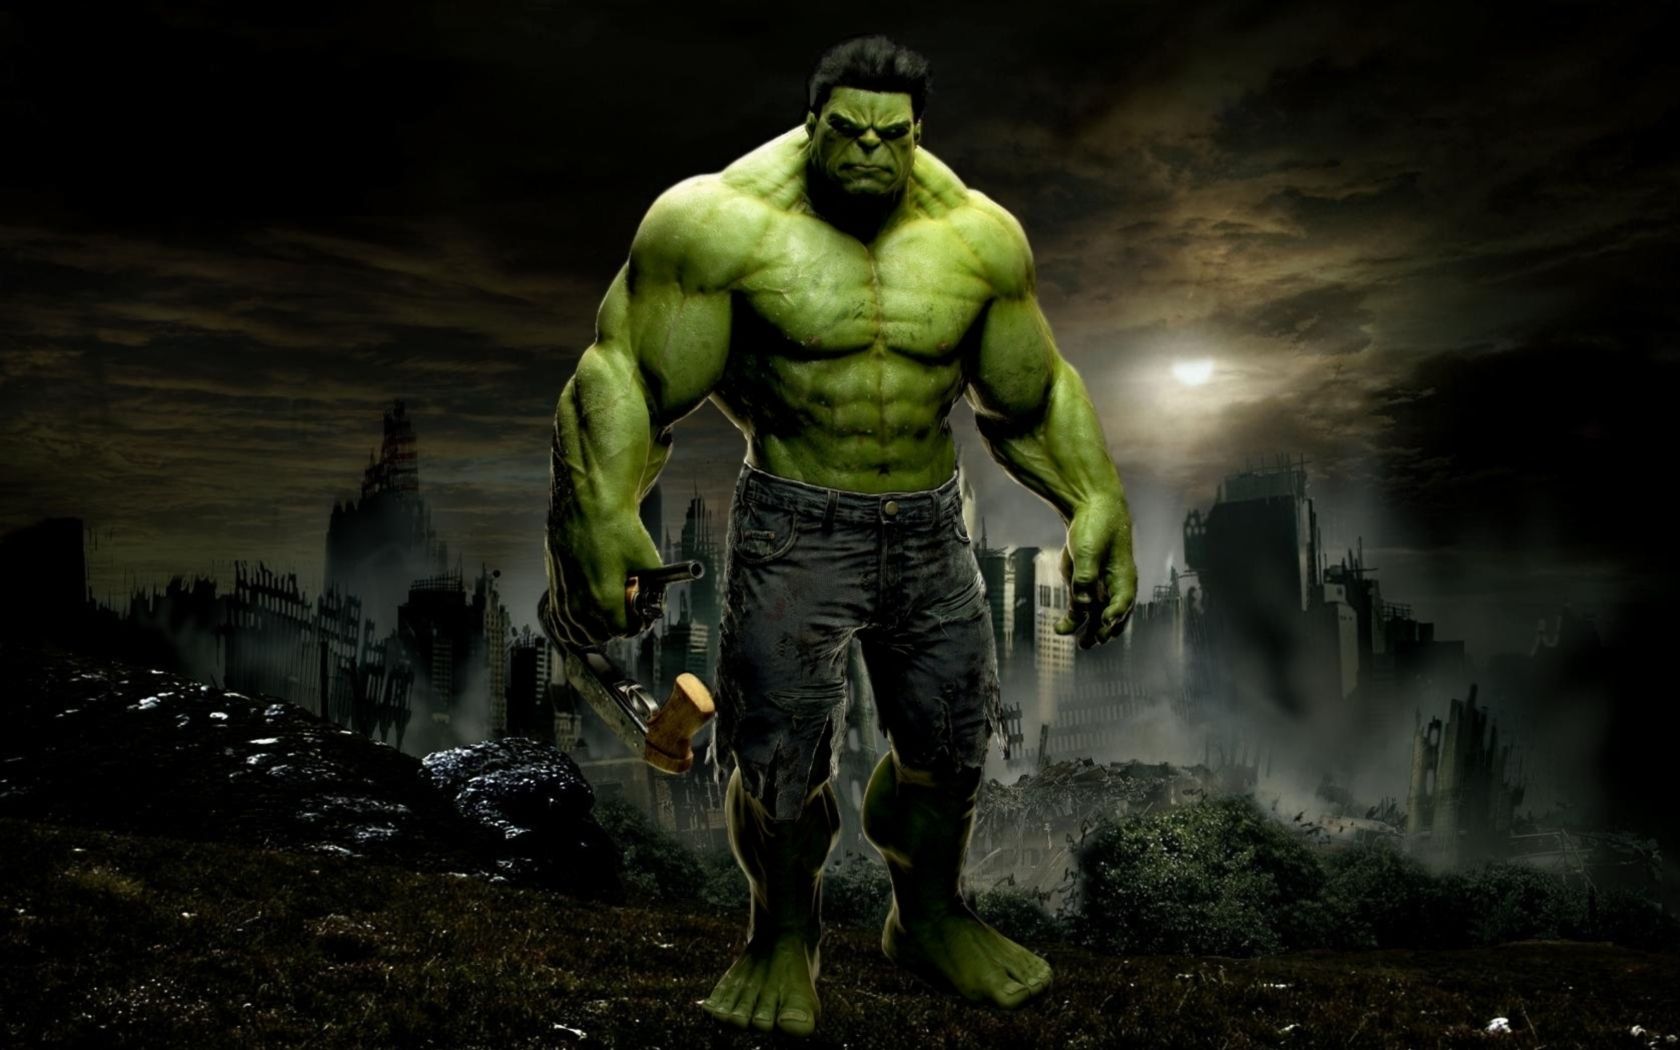 Hulk Movie Poster Wallpapers